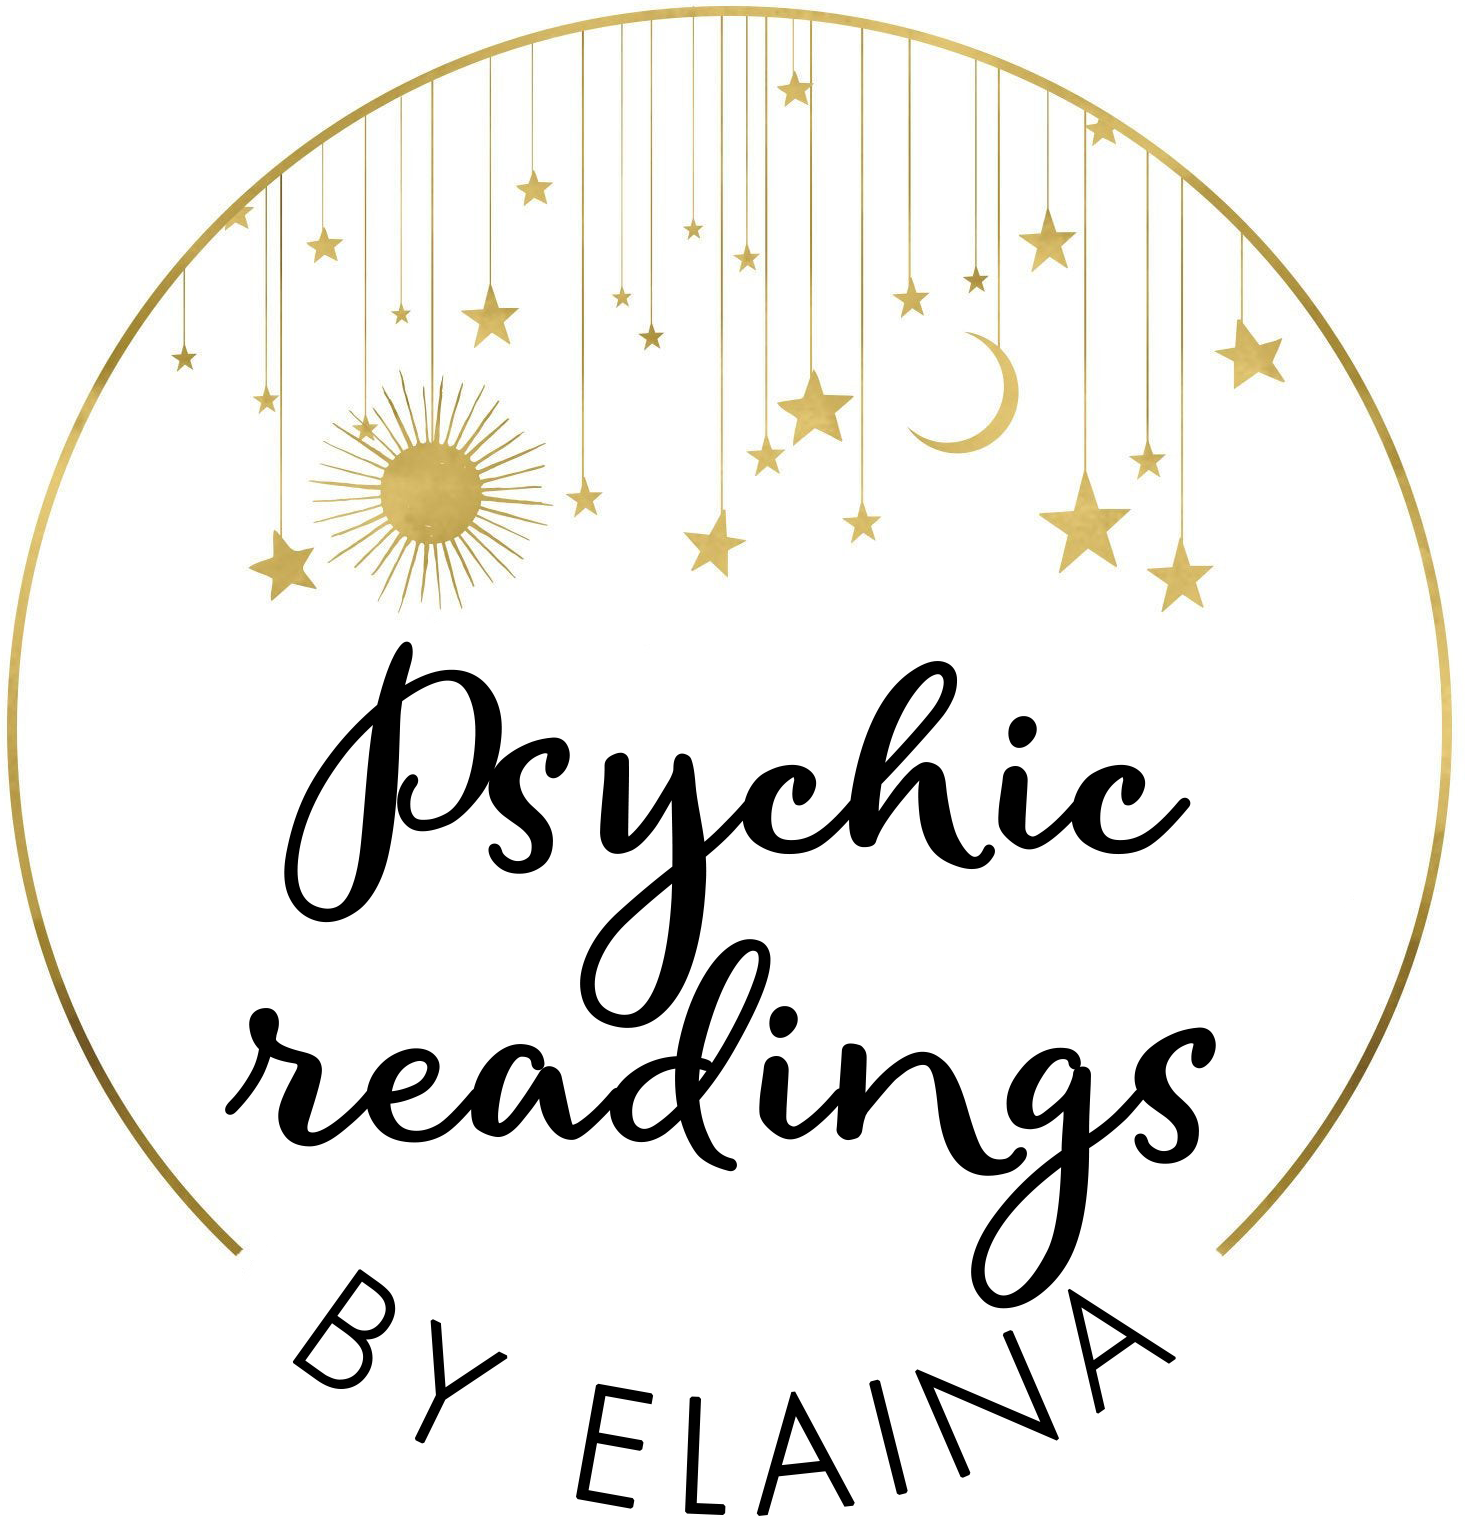 Psychic Readings by Elaina